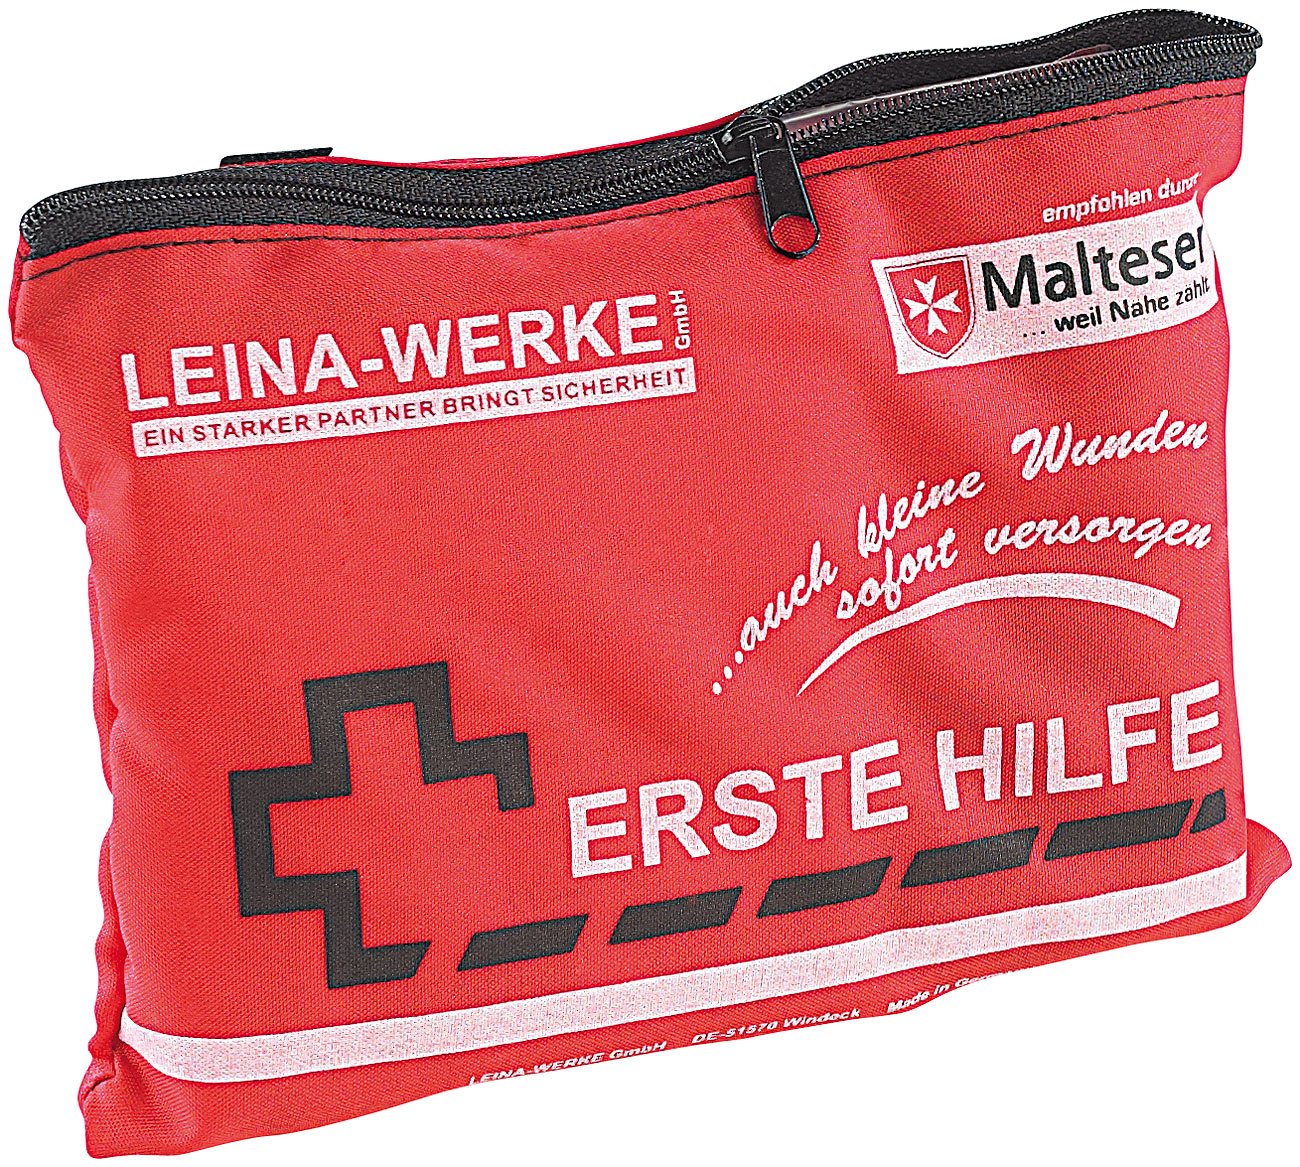 Leina Werke 50000 Mobile first aid kit 2-color red 1 pc. von Leina Werke